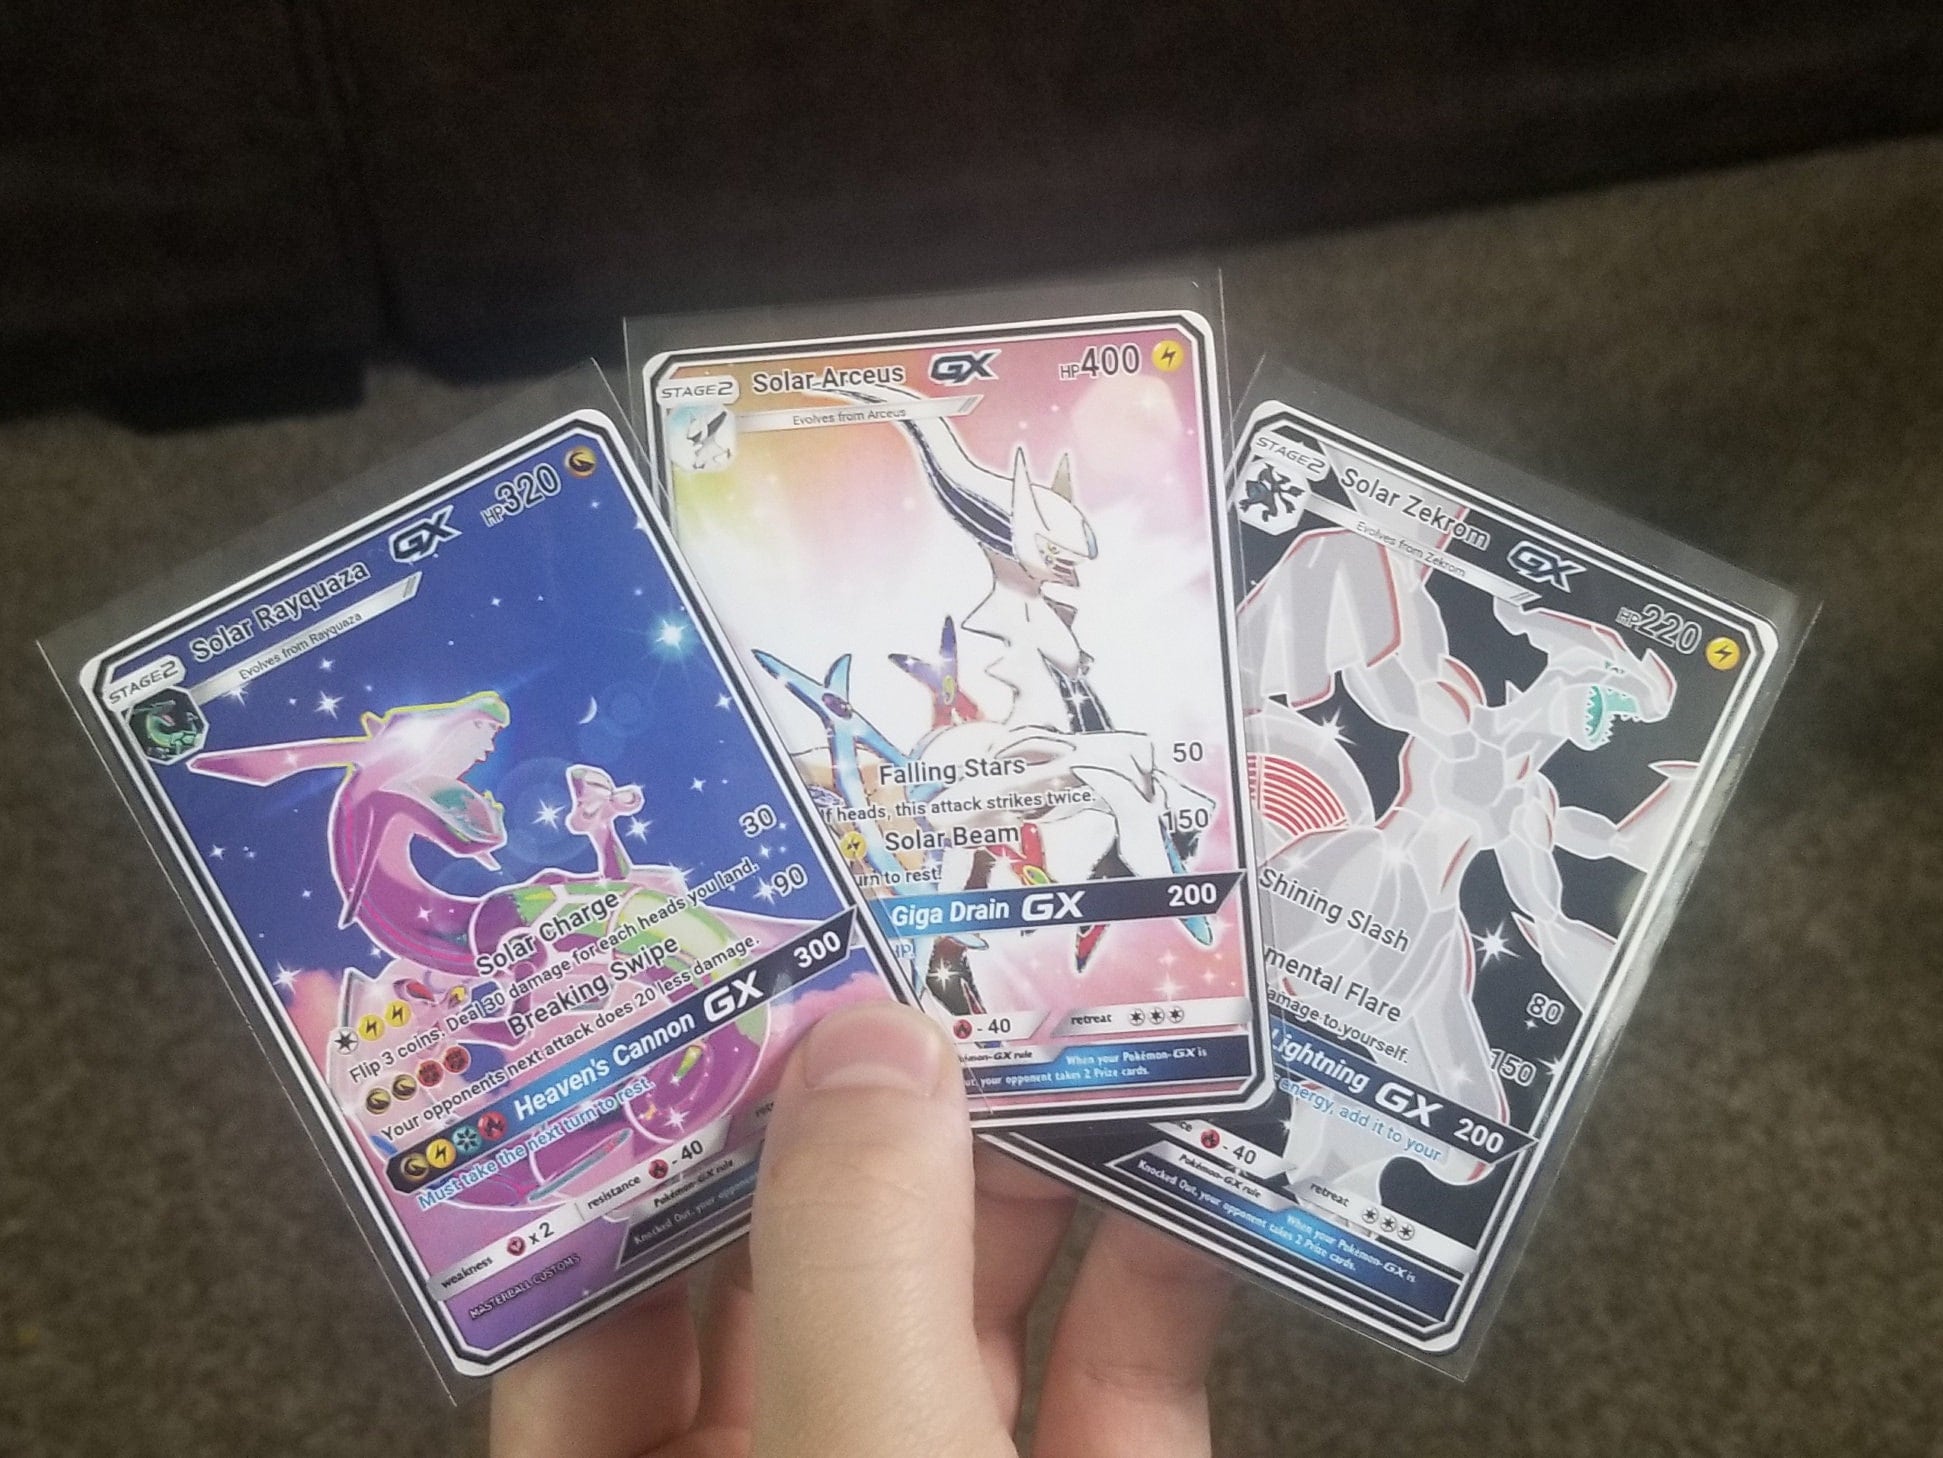 Solar Rayquaza GX - Fan-Made Custom Trading Card Pokemon